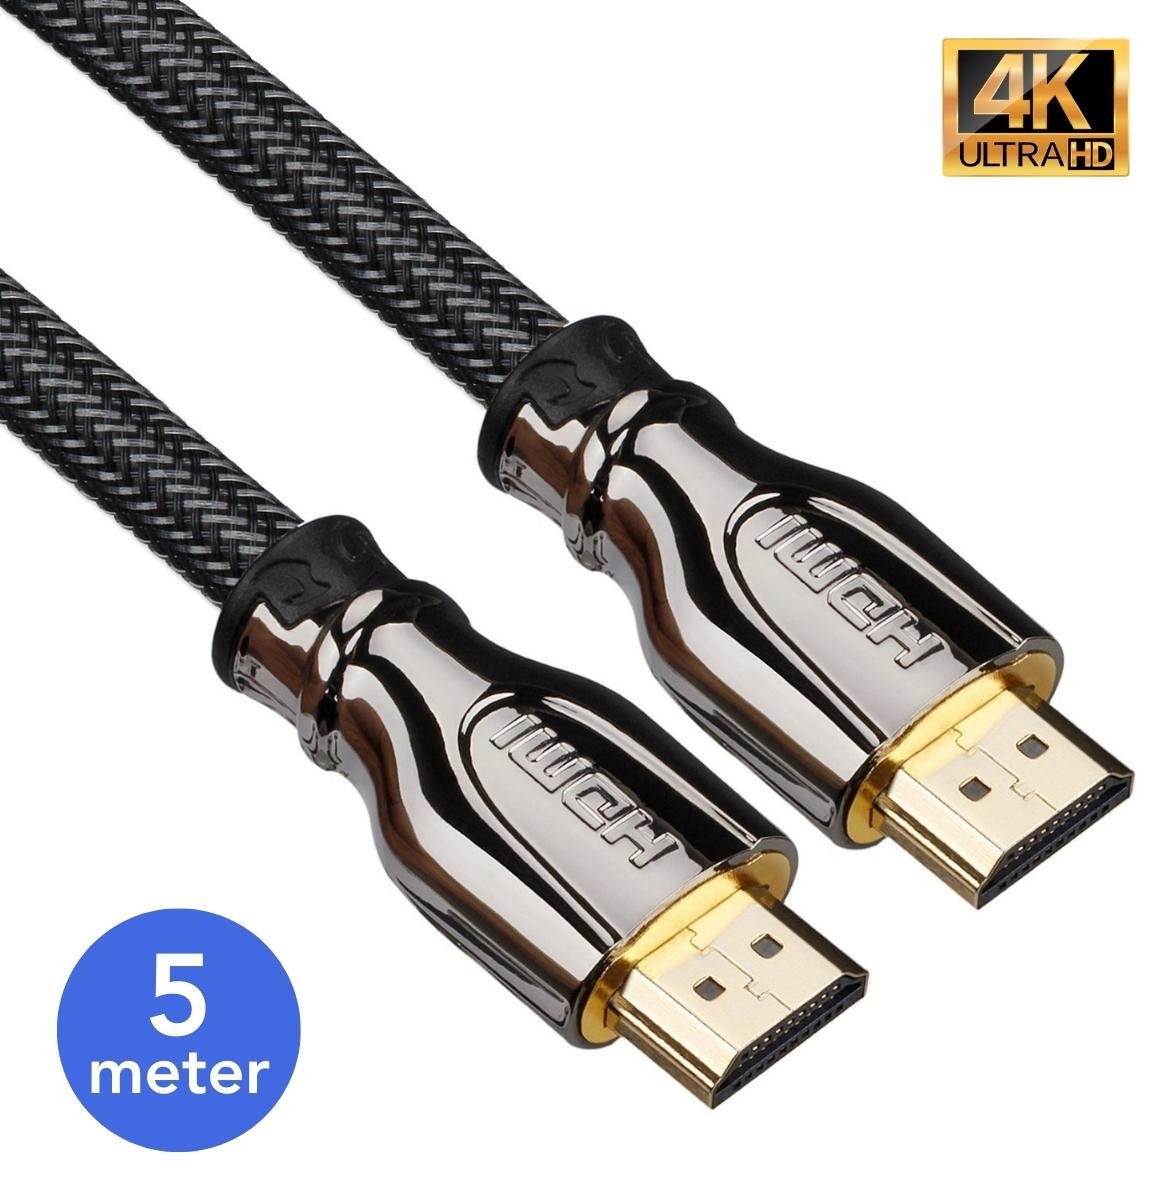 HDMI 2.0 Kabel 5 Meter - Ultra HD 4K High Speed (60/120/240Hz) - Vergulde Connectoren - 18GBPS - Premium 3D - TV - PC - PlayStation 4 - Xbox One